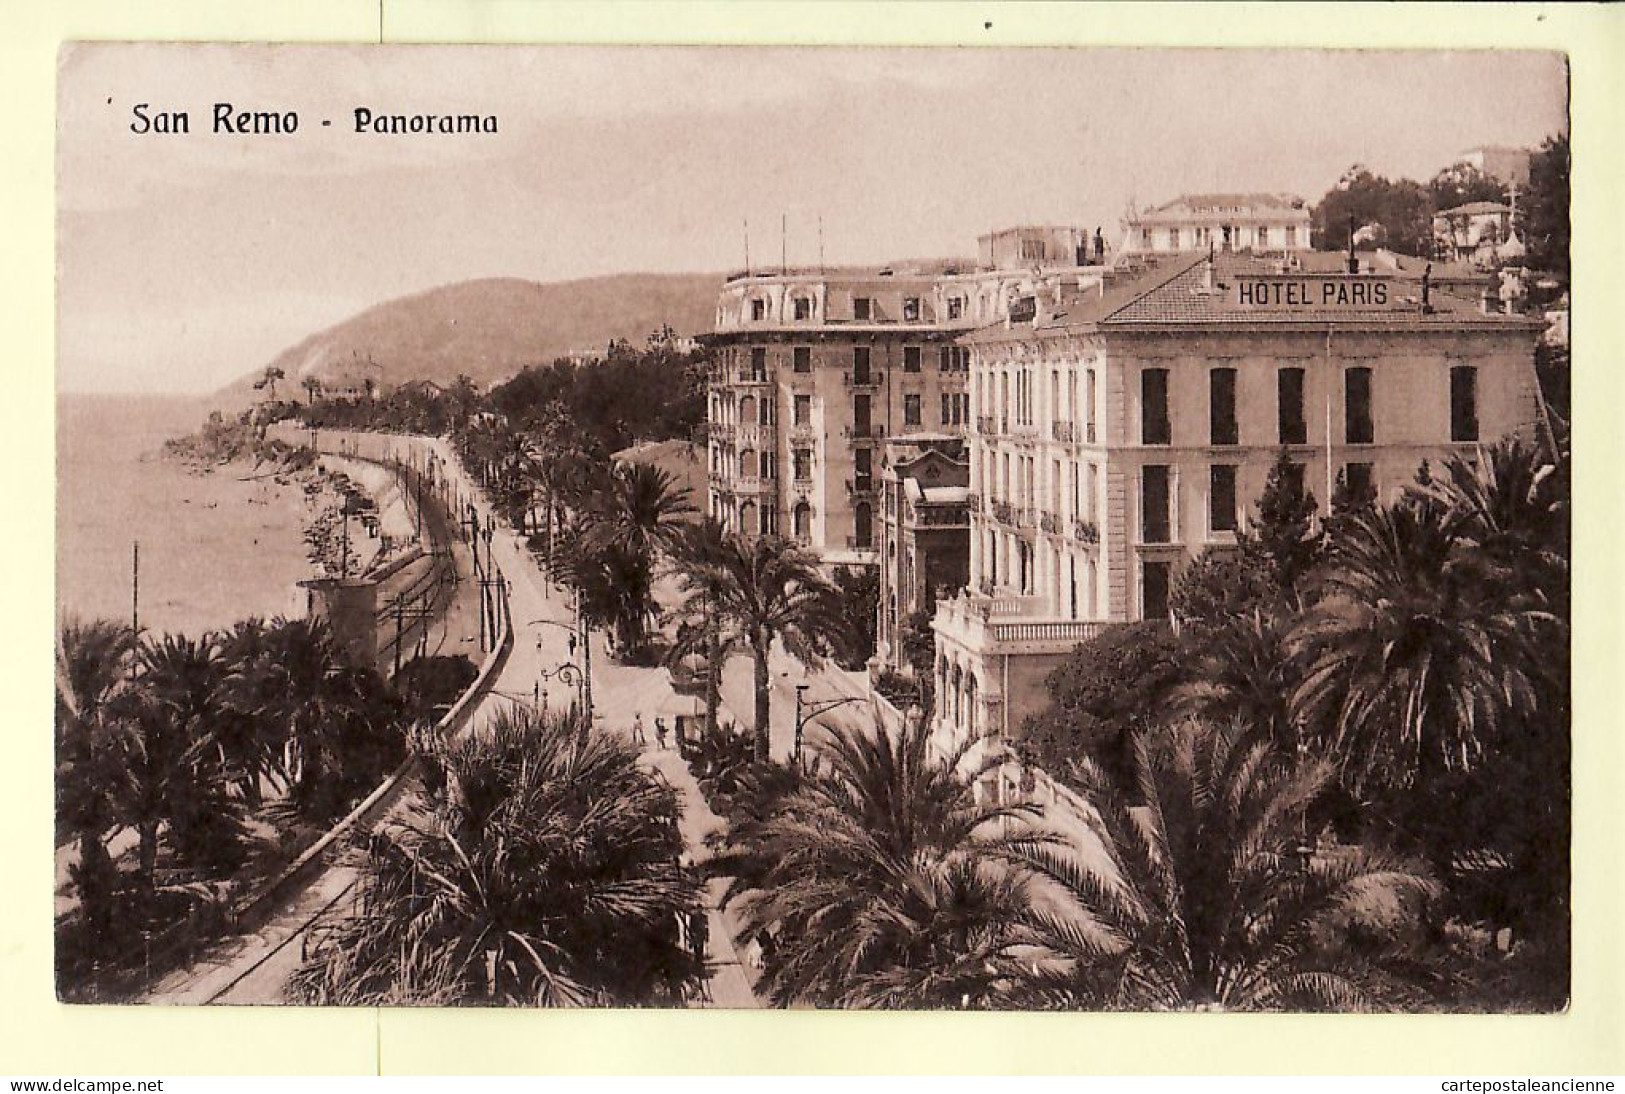 26846 / ⭐ Liguria SANREMO SALUTI De SAN REMO PANORAMA 1920s ¤ S.Edit 18049 Italia Italie - San Remo